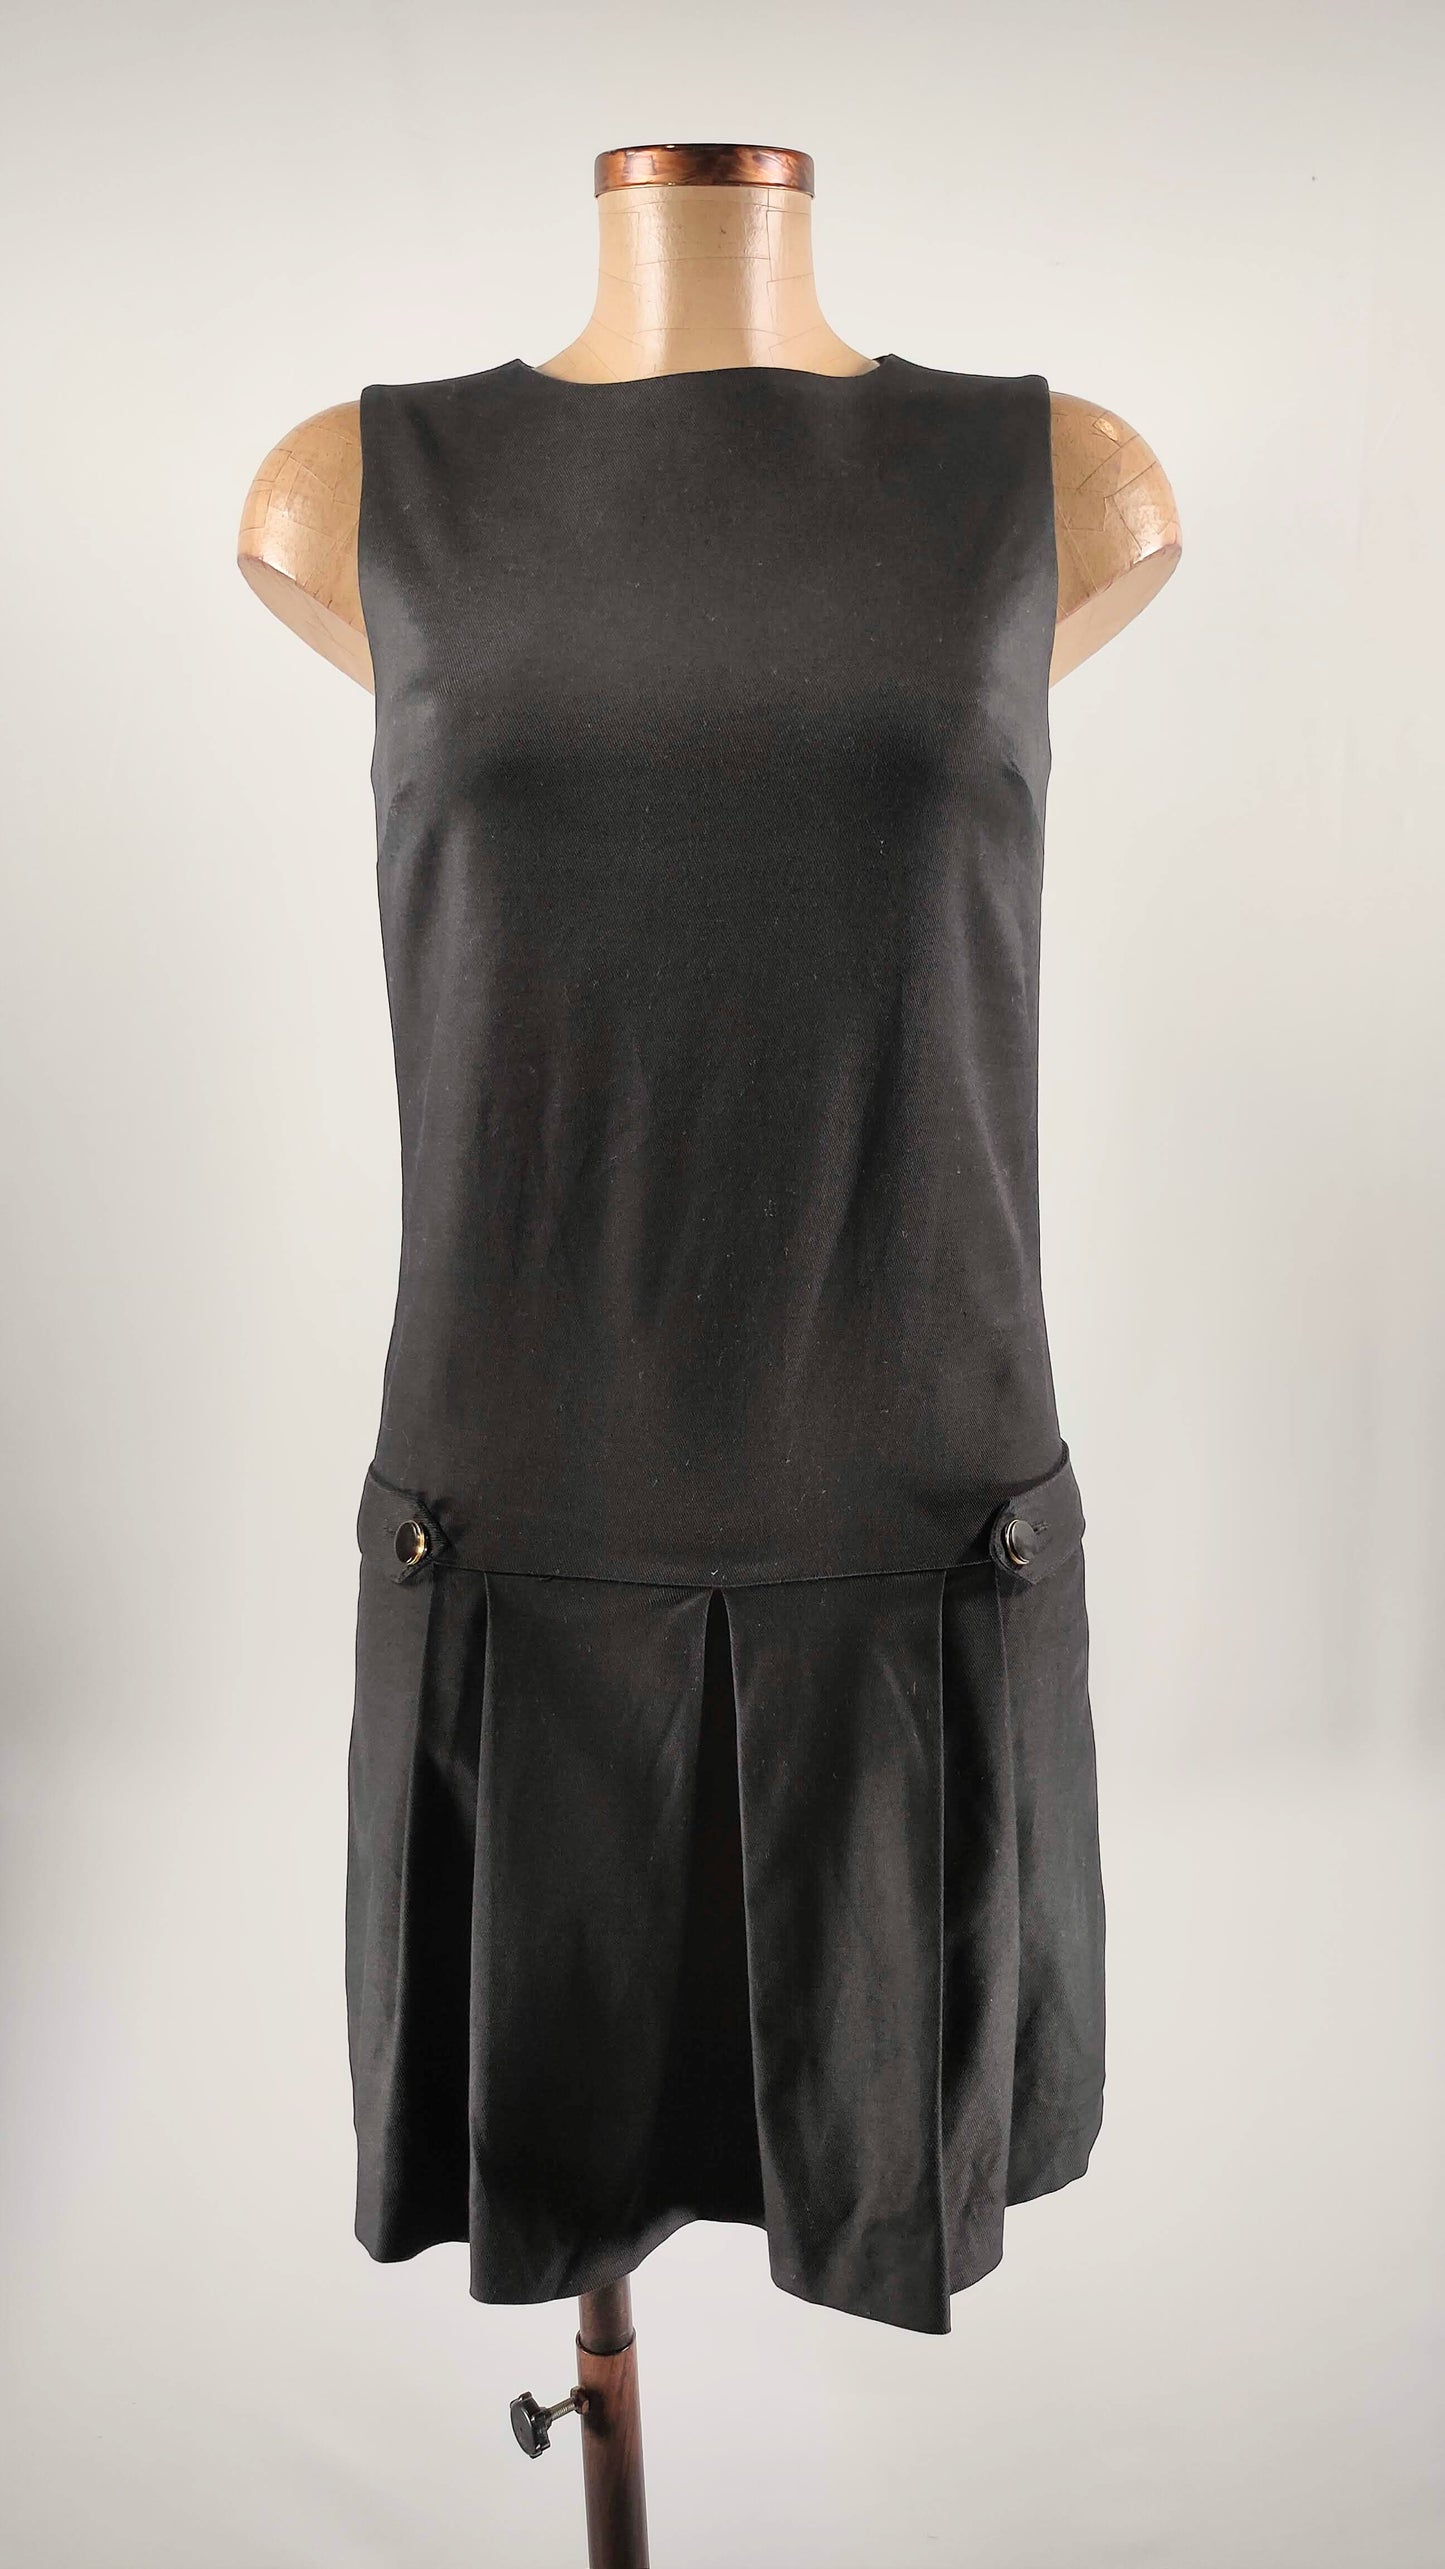 Pichi negro con detalle de botón en falda